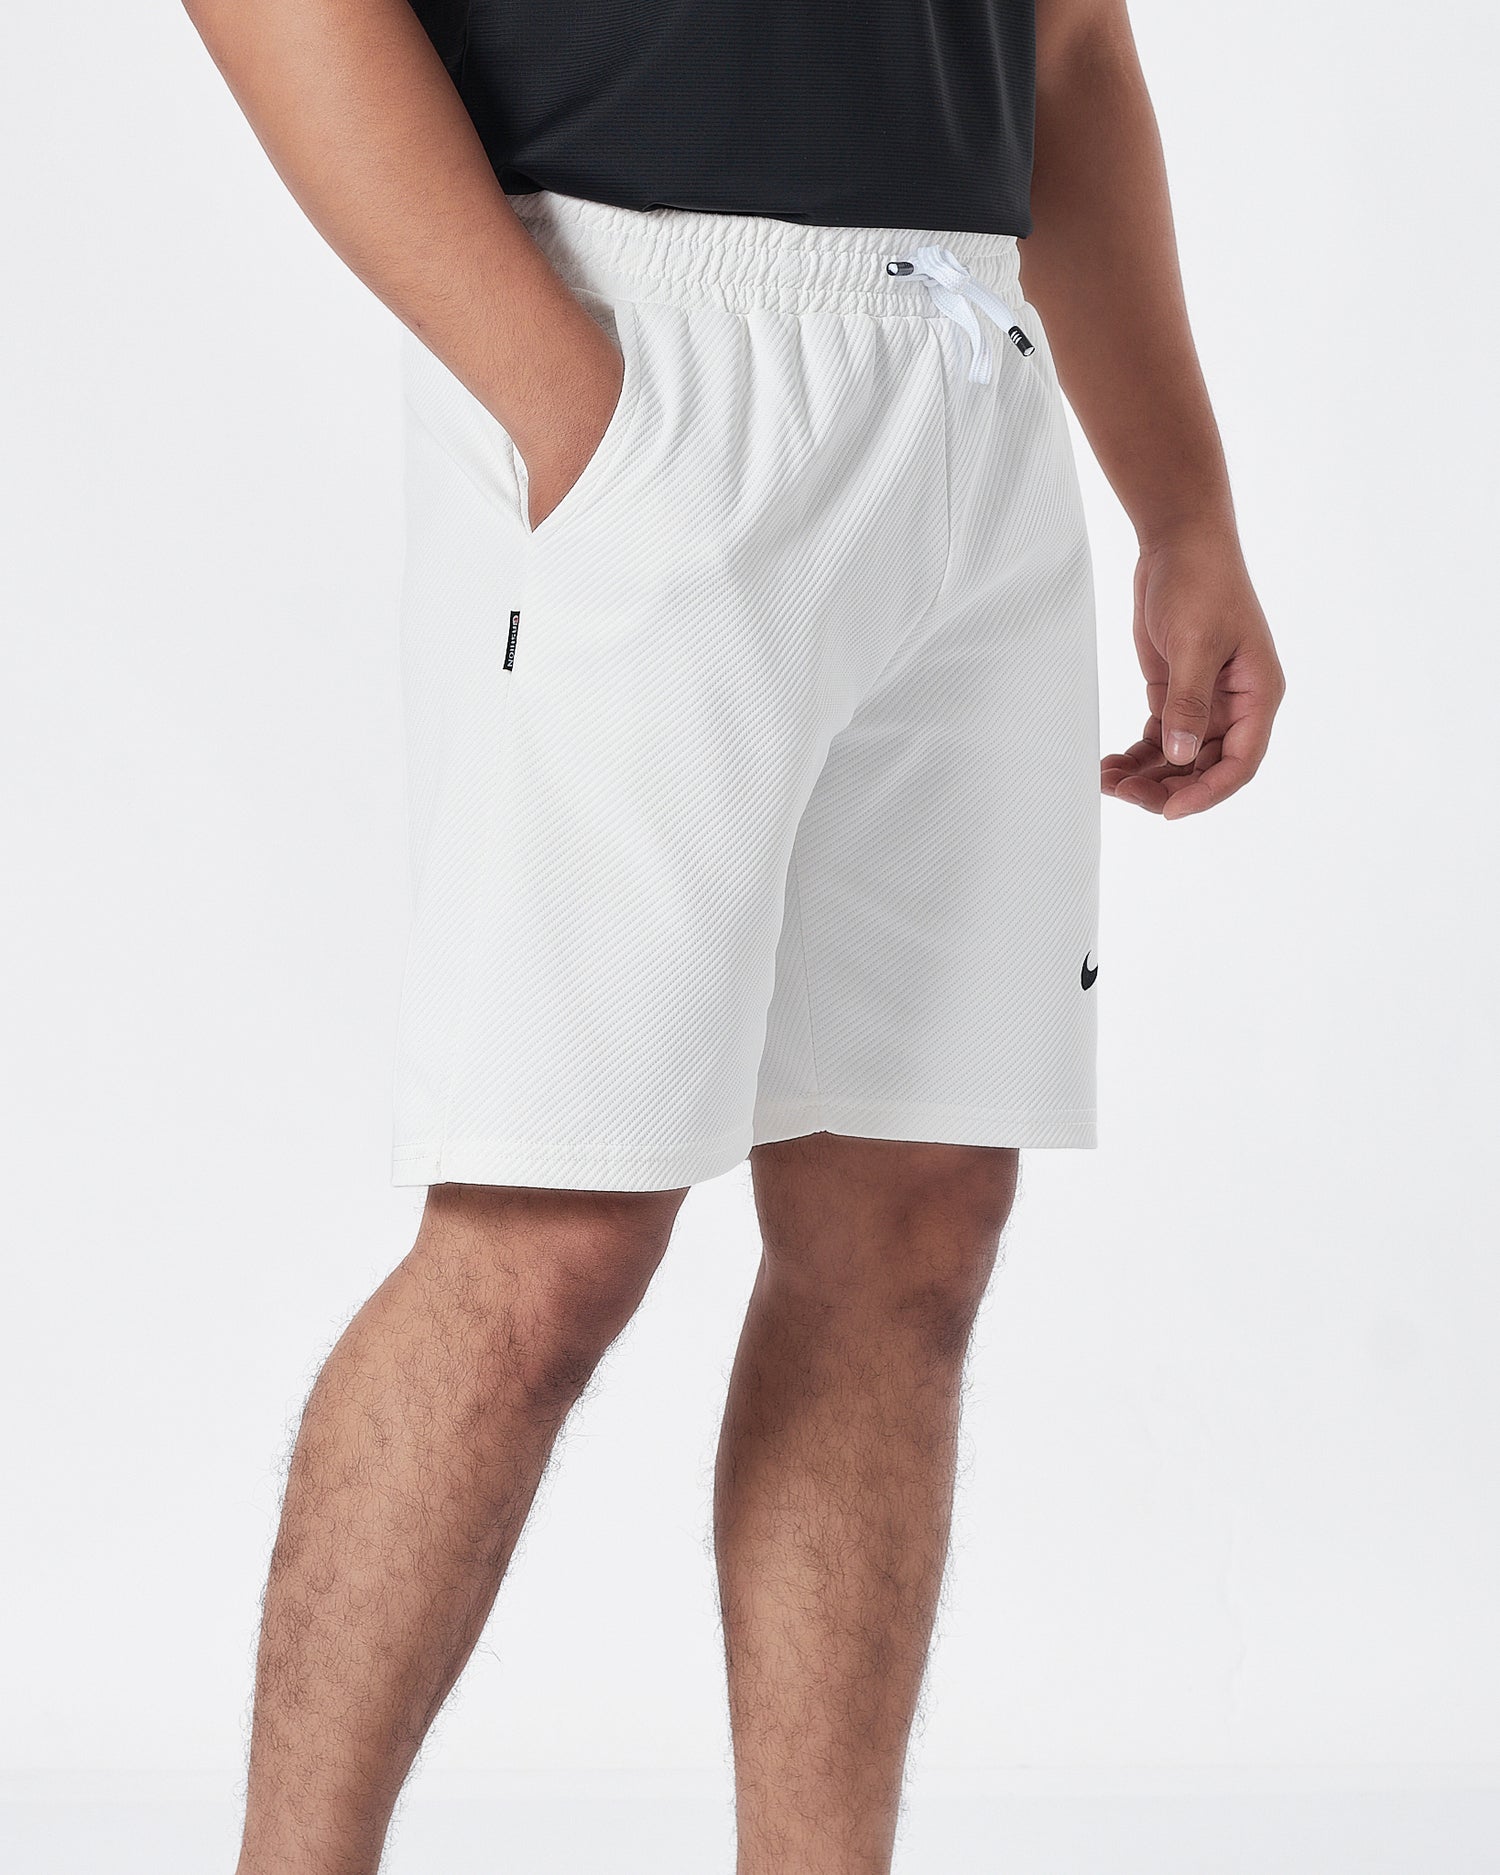 NIK Swooh Logo Printed Men White Track Shorts 13.90